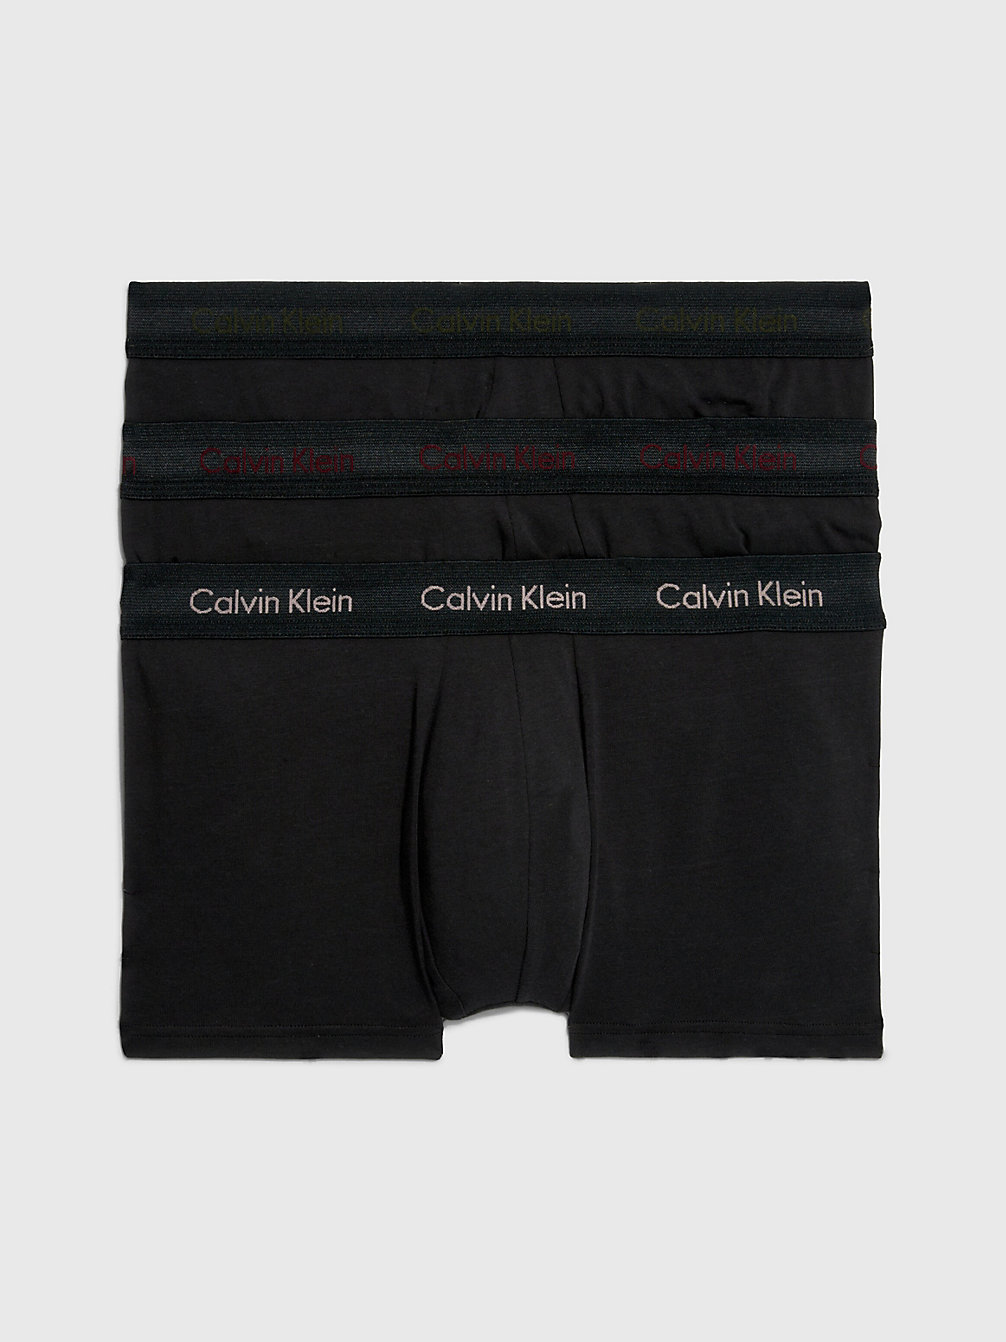 B-WOODROSE, FLD OLV, DEEP ROUGE LG 3 Pack Low Rise Trunks - Cotton Stretch undefined men Calvin Klein